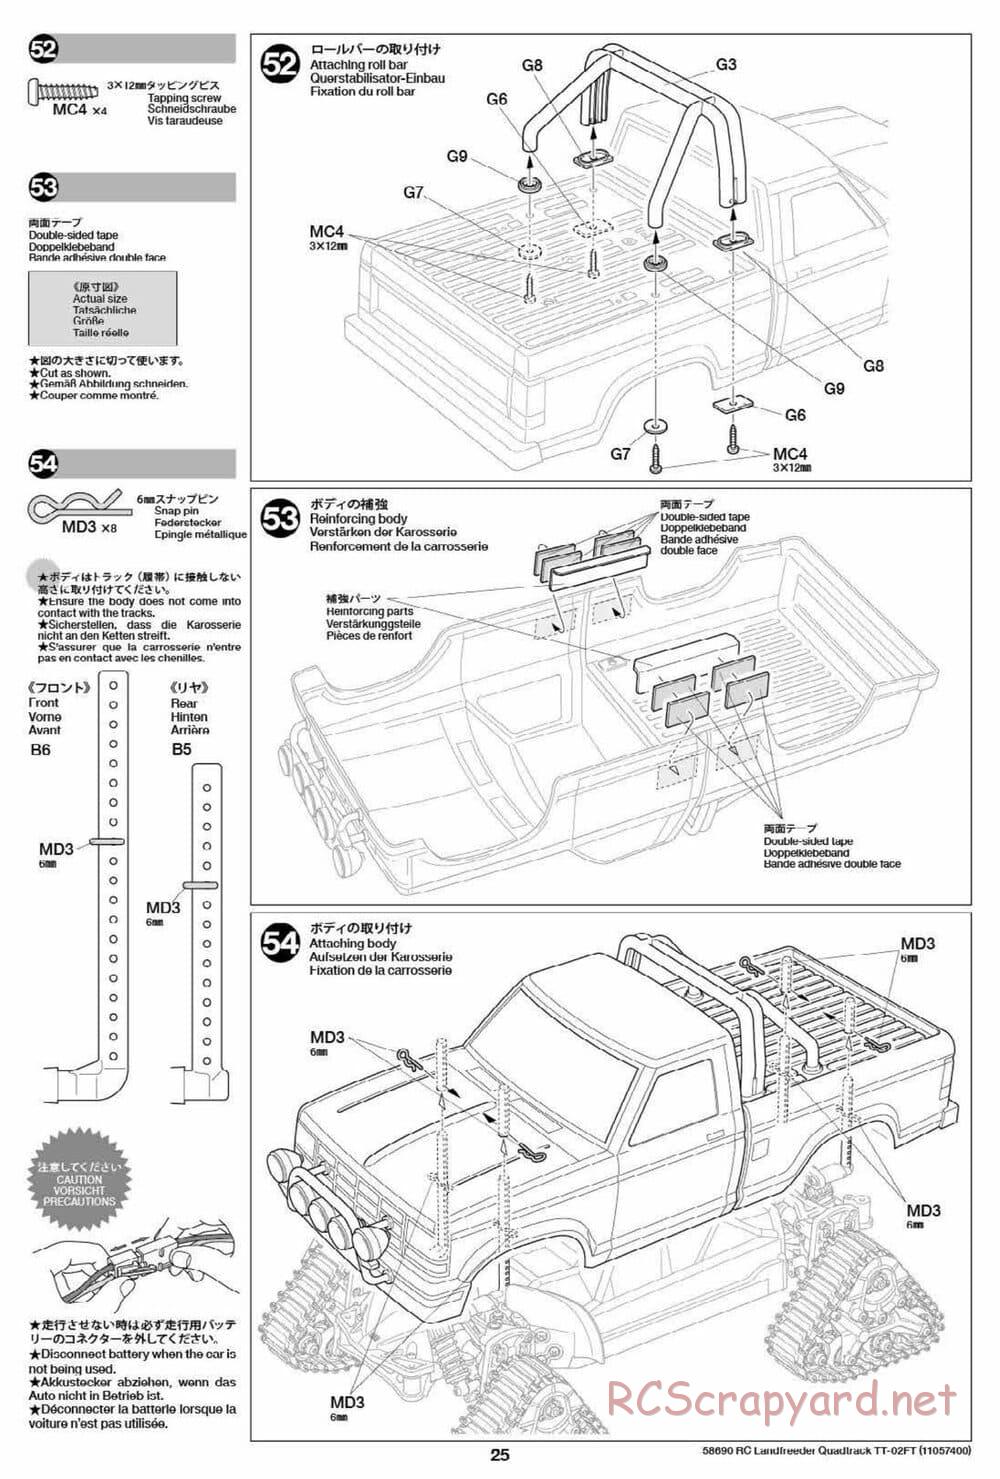 Tamiya - Landfreeder Quadtrack - TT-02FT Chassis - Manual - Page 25